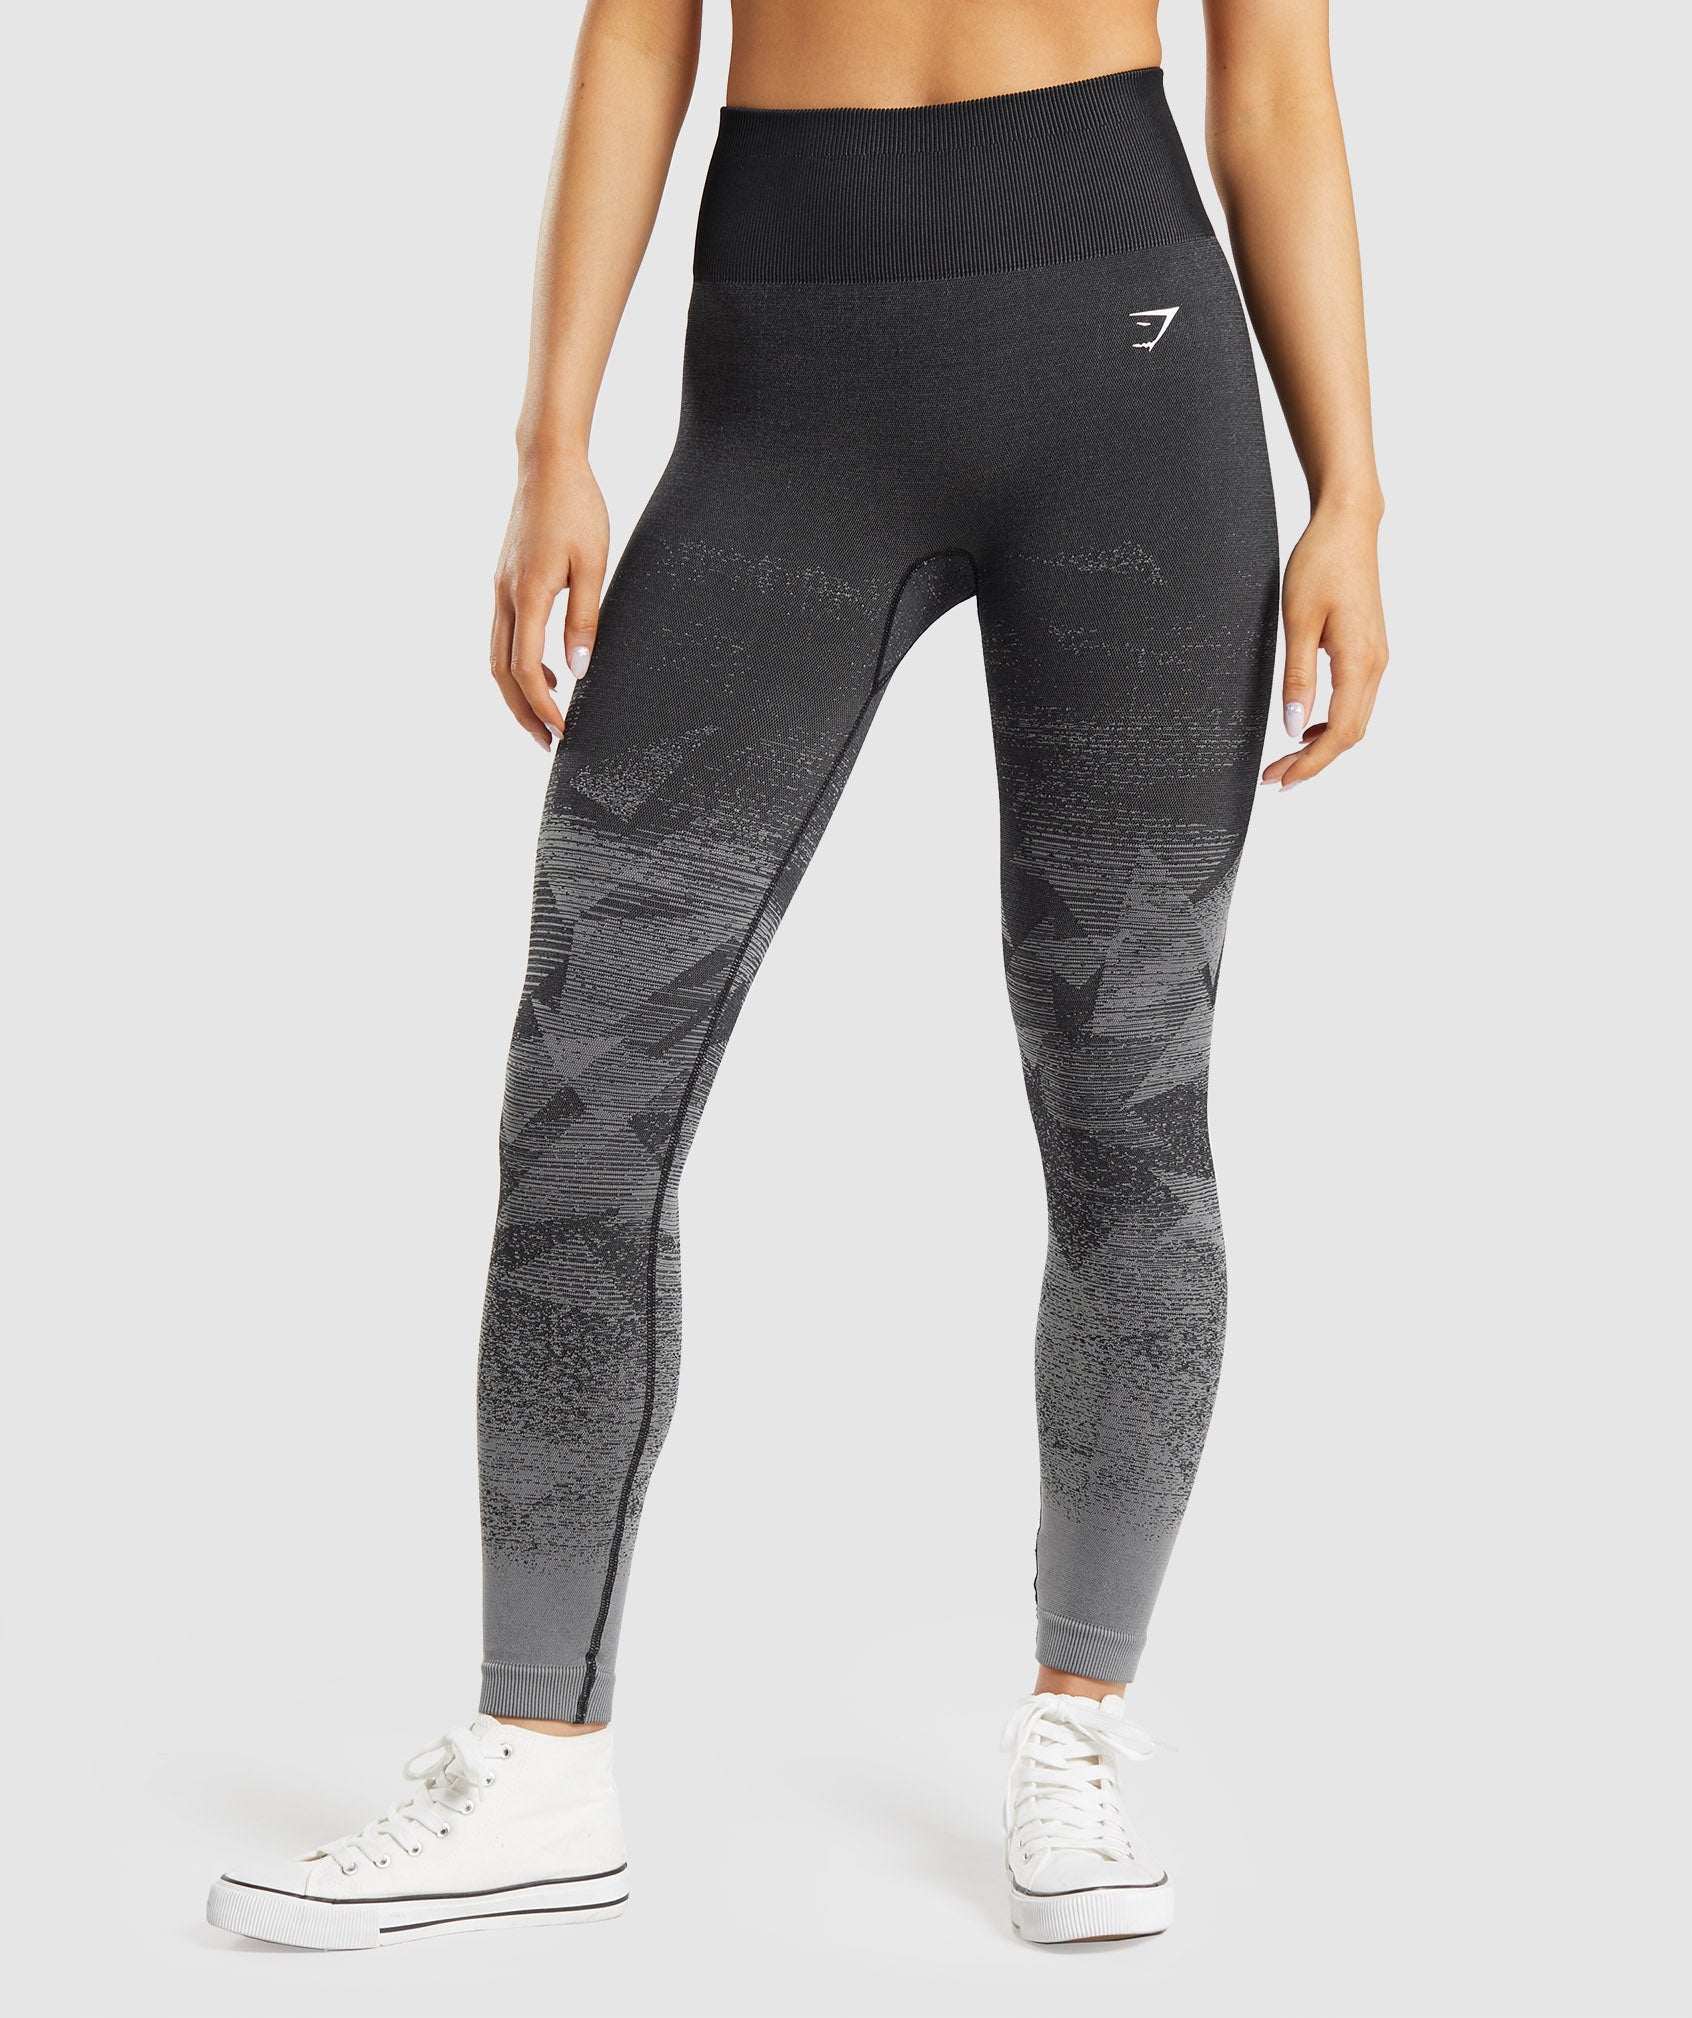 Pants & Jumpsuits, Gymshark Ombre Seamless Leggings